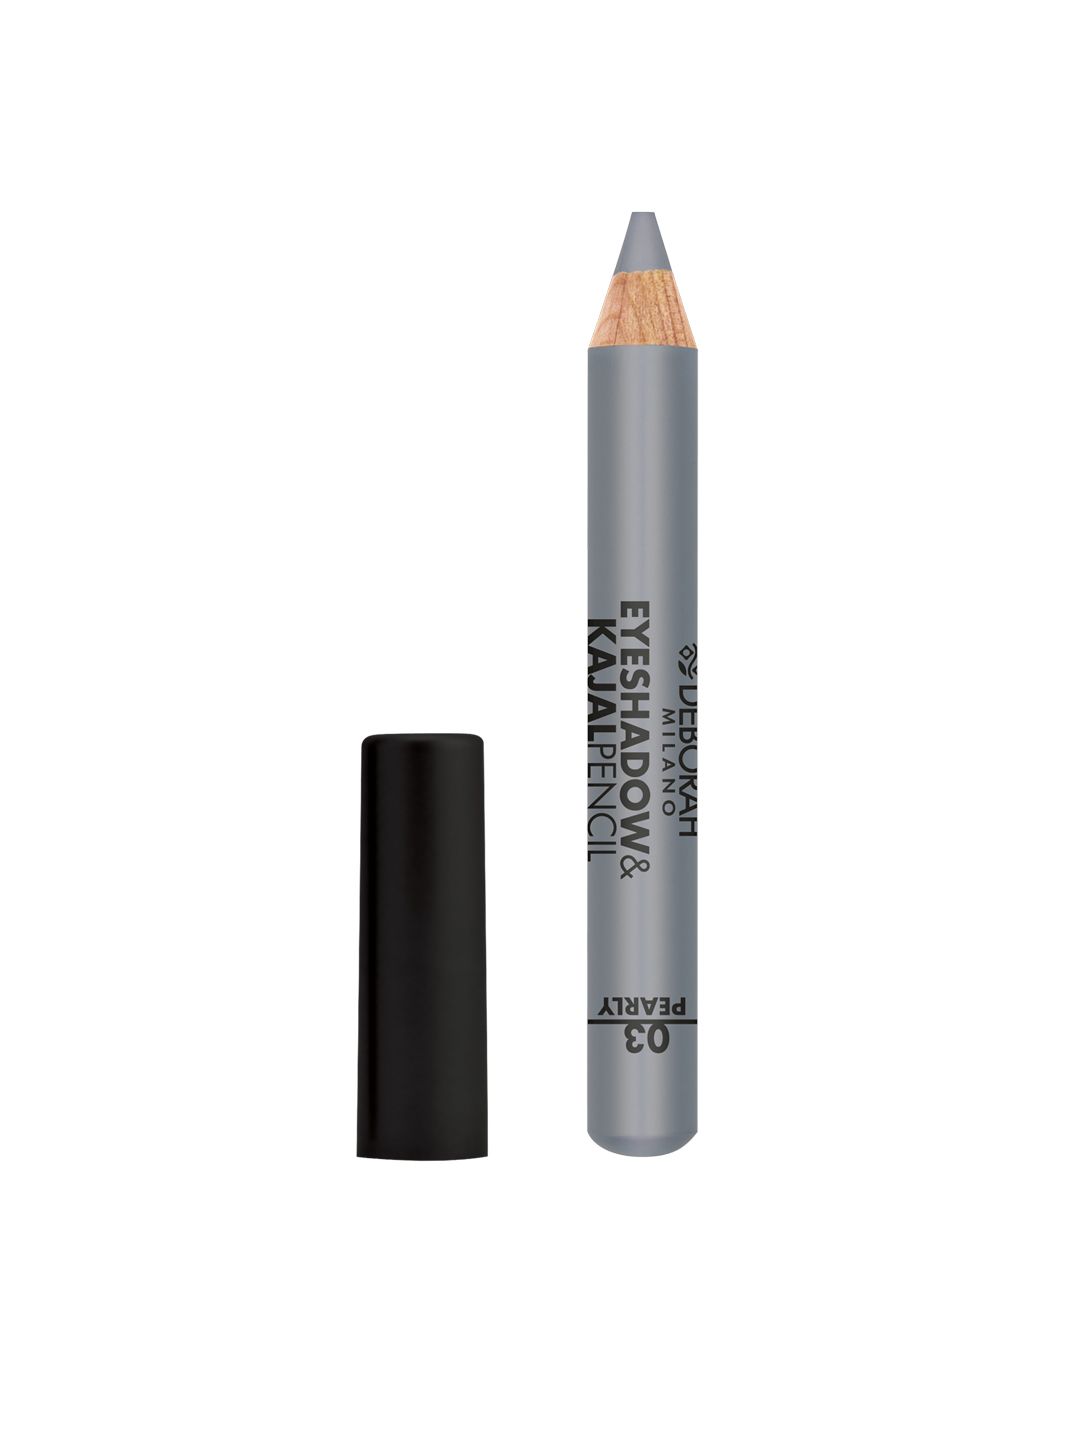 Deborah Milano 03 Pearly Silver Eyeshadow & Kajal Pencil 2 g Price in India